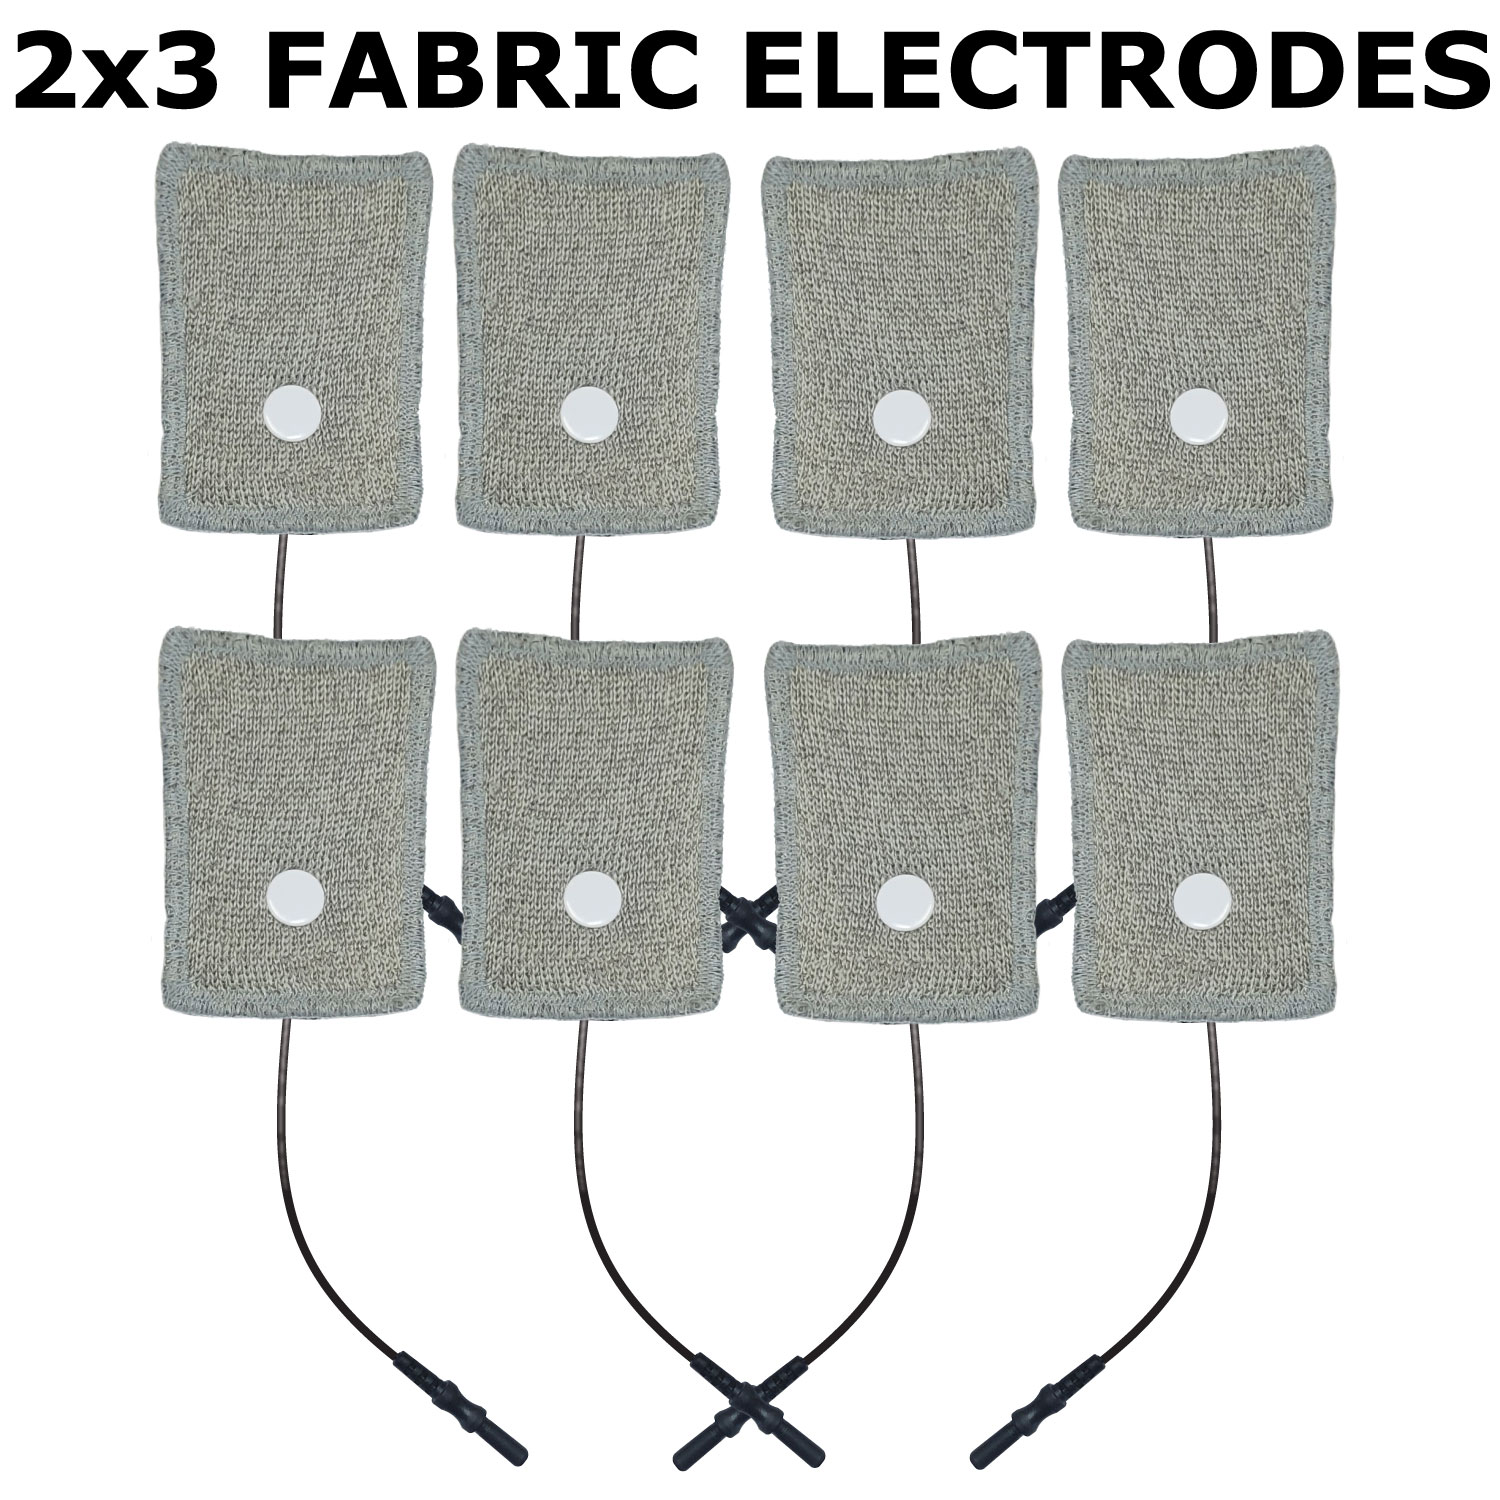 https://www.bmls.com/wp-content/uploads/2017/12/2x3-Fabric-Electrodes-8.jpg